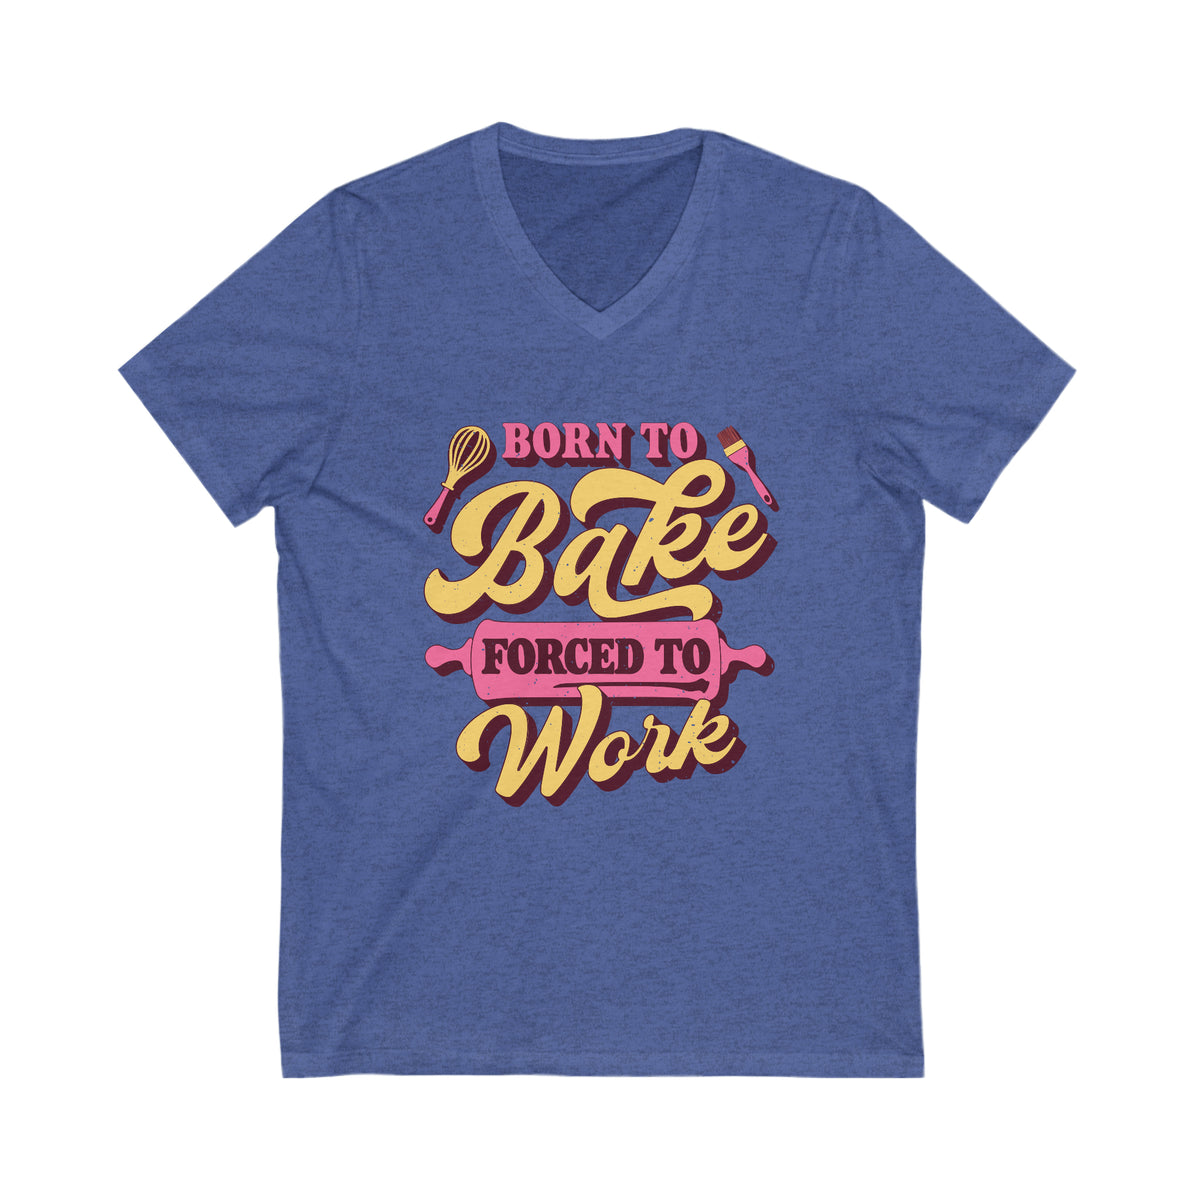 Born To Bake Funny Baking Shirt | Forced To Work Gift For Baker | Unisex Jersey V-neck T-shirt